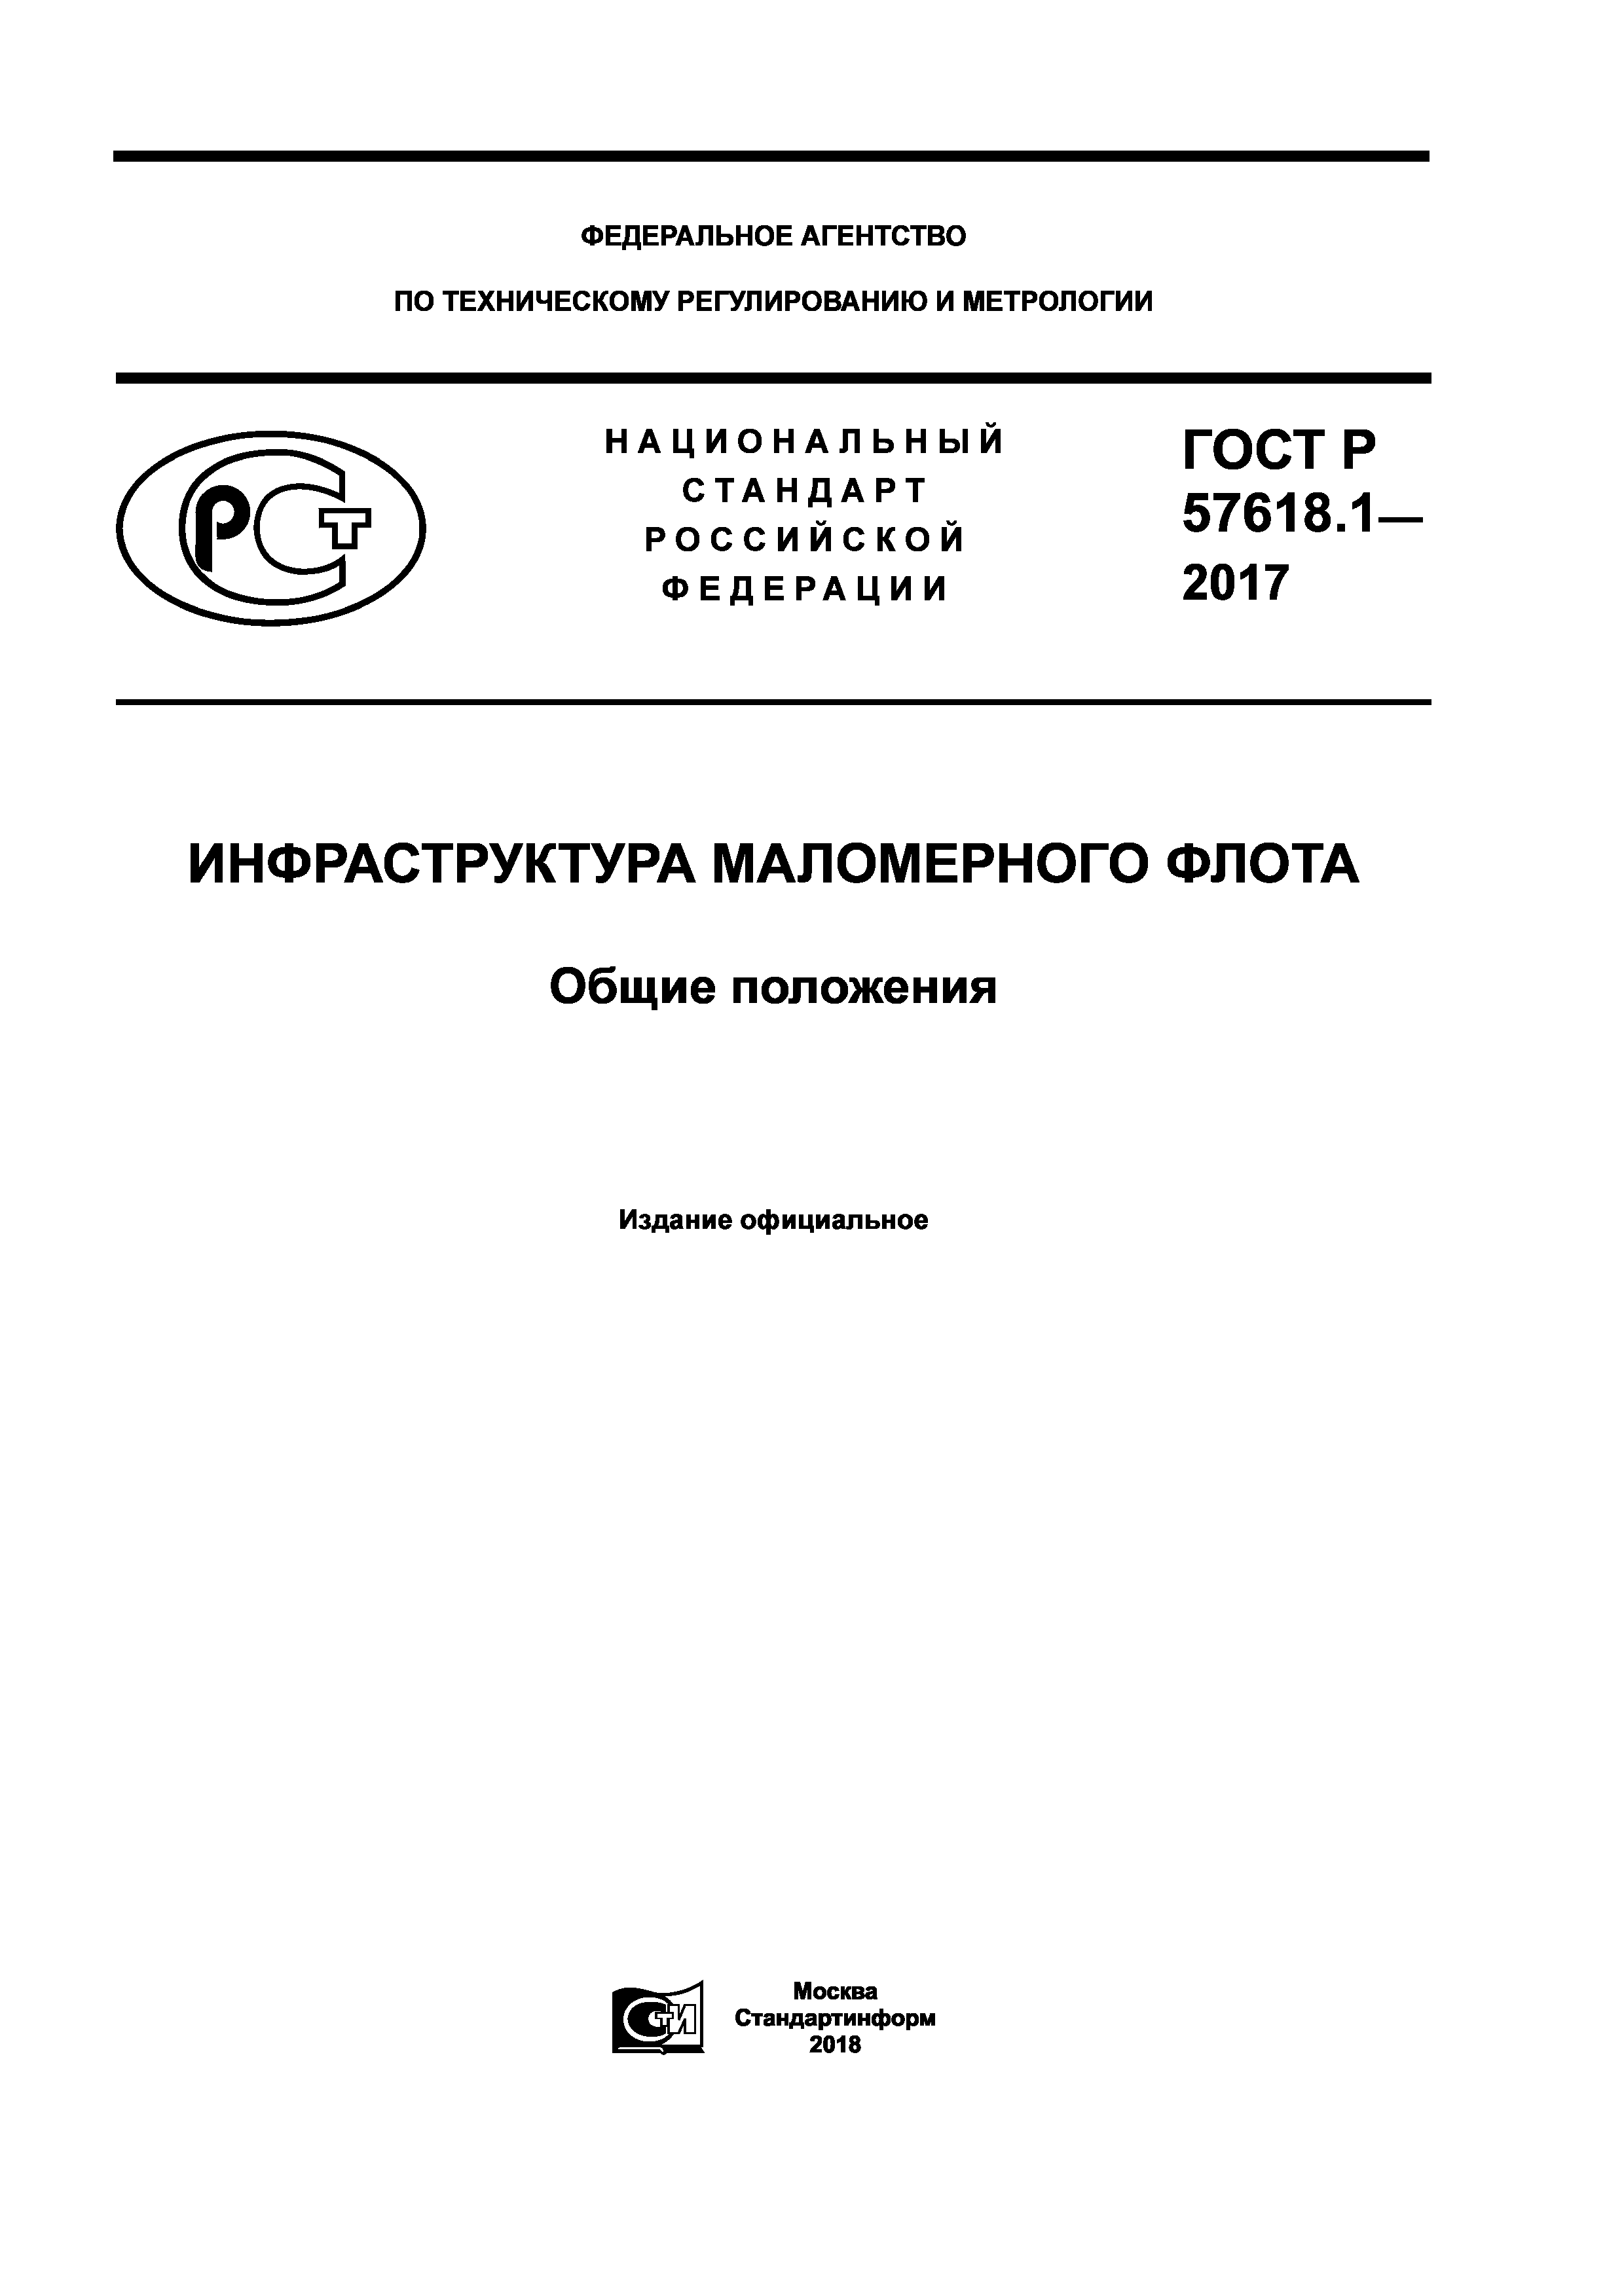 ГОСТ Р 57618.1-2017